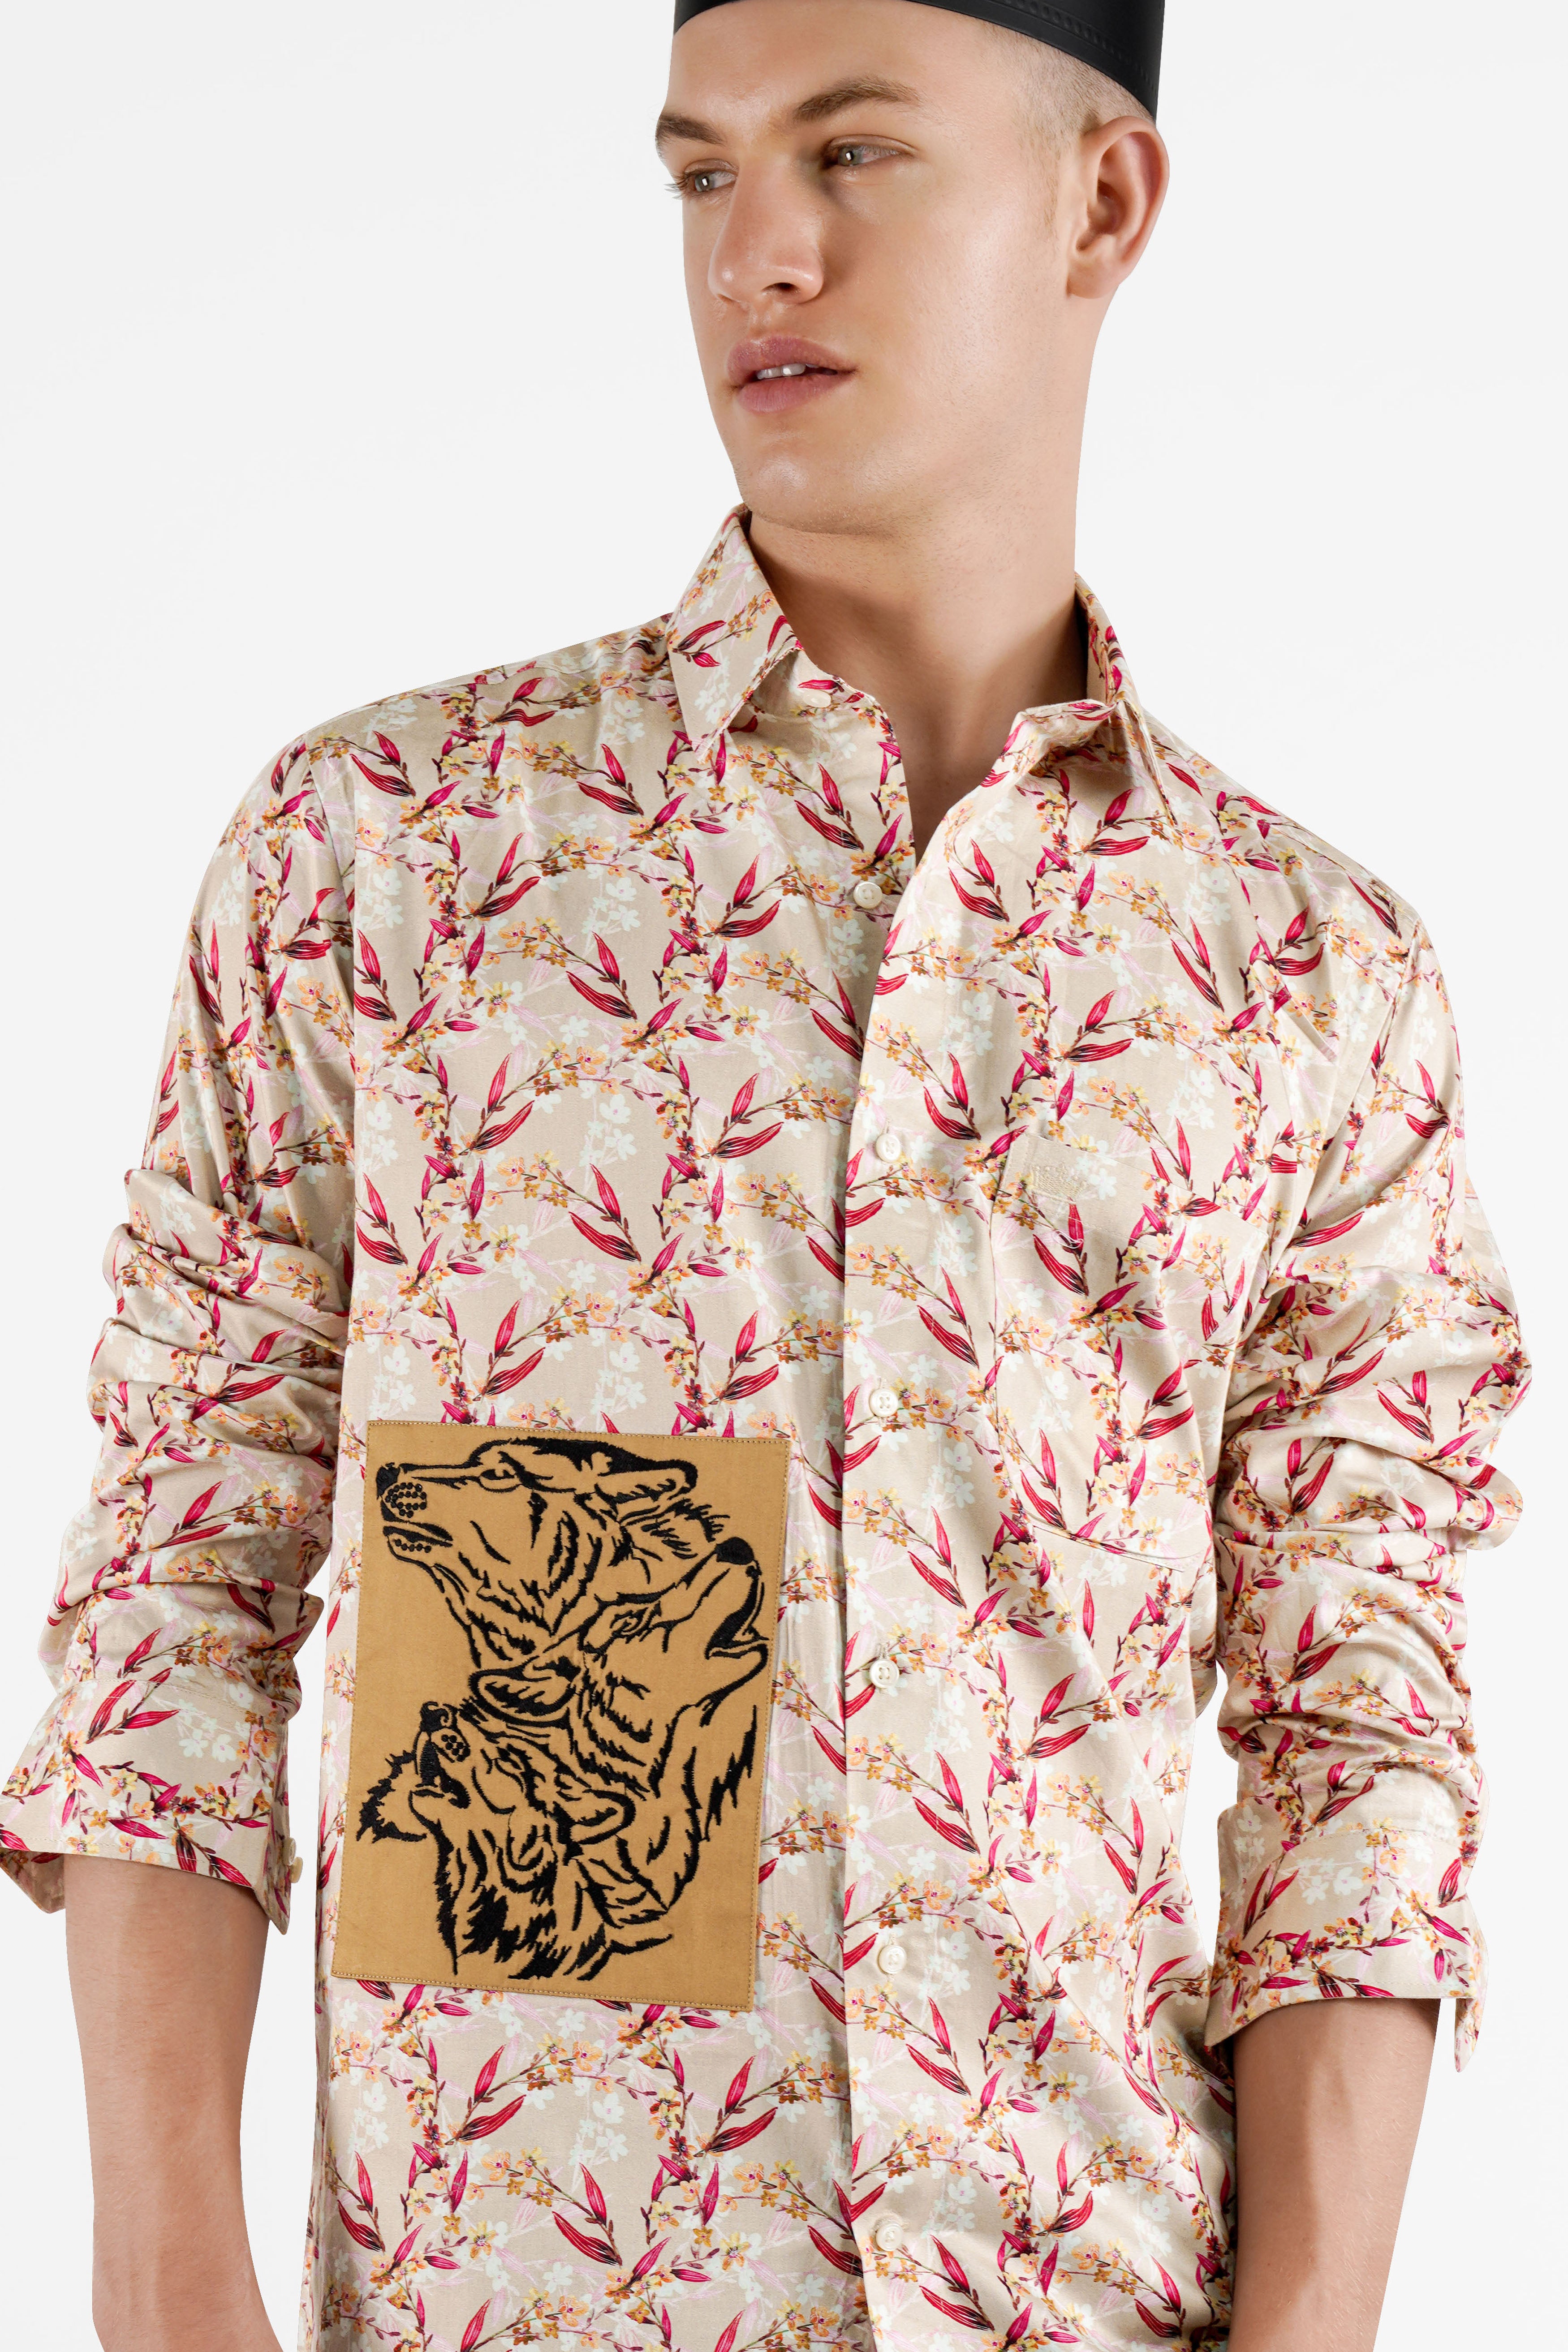 Bone Beige Leaves Printed with Dogs Patch Work Super Soft Premium Cotton Designer Shirt